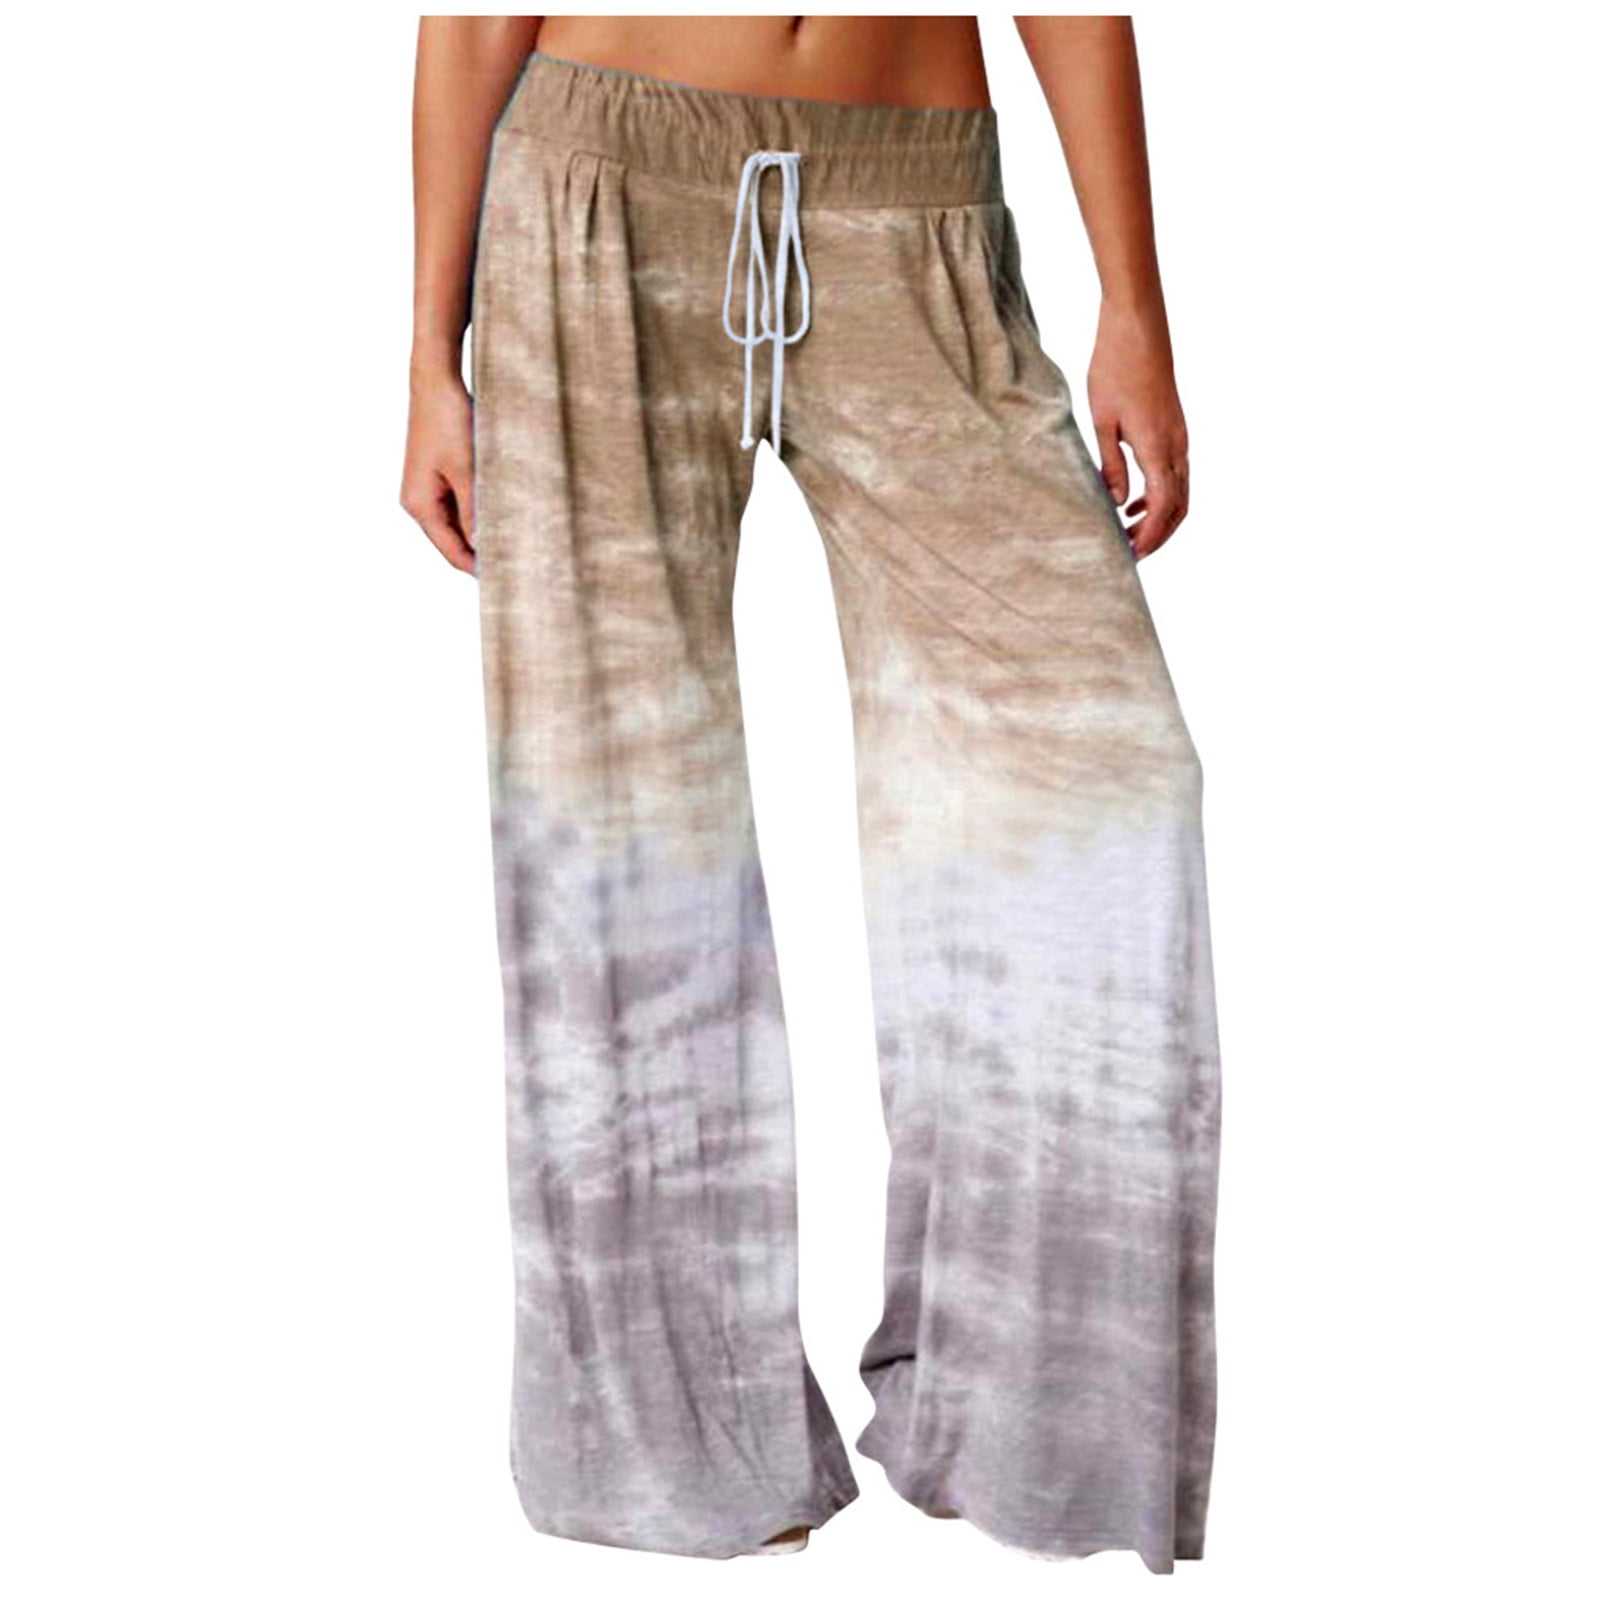 RYRJJ Women's Comfy Casual Pajama Pants Stretch Tie Dye Print ...